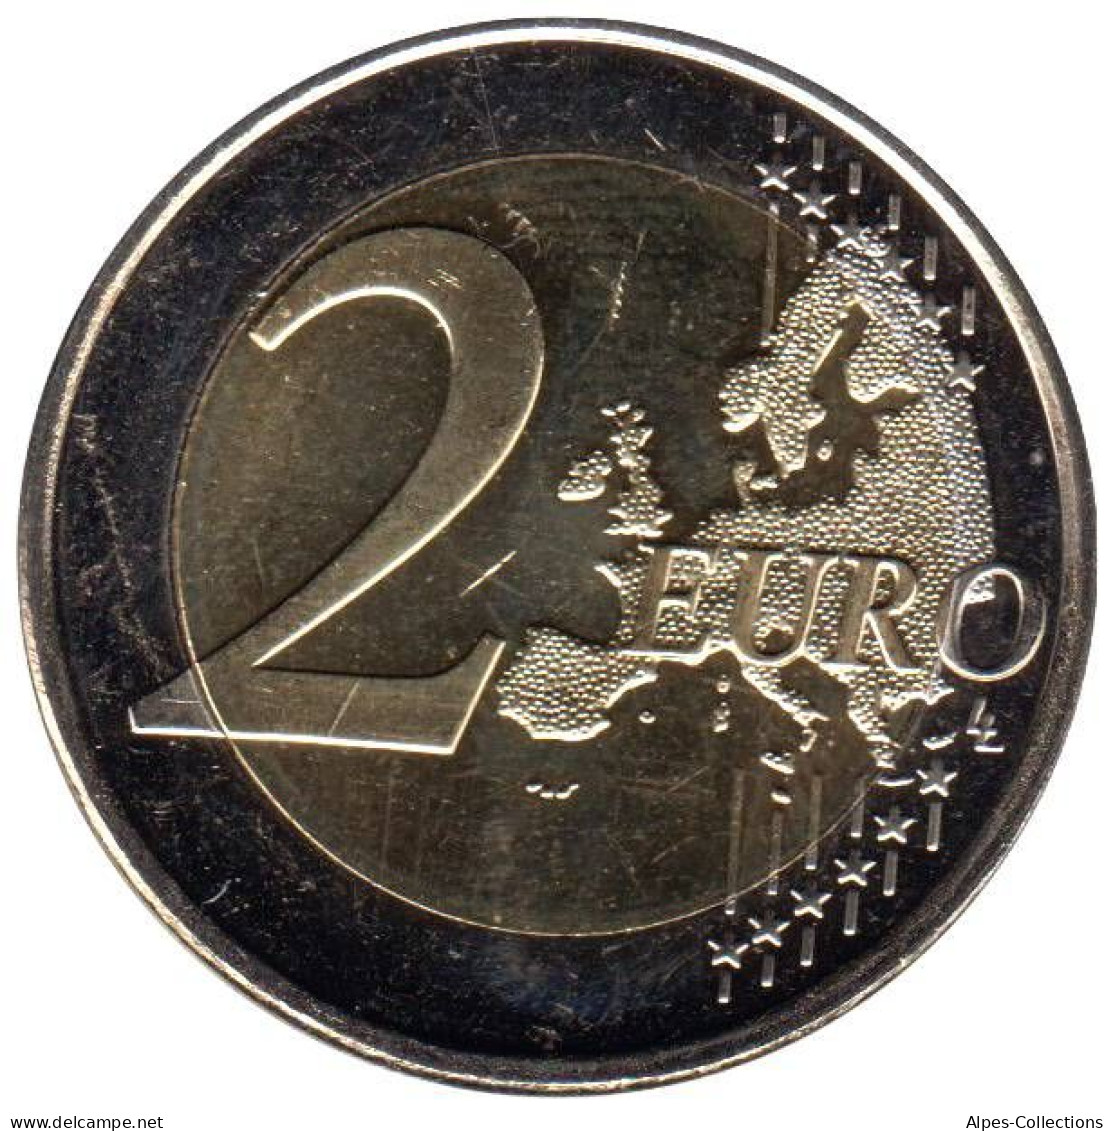 FI20010.1 - FINLANDE - 2 Euros Commémo. 150 Ans Monnaie Finlandaise - 2010 - Finland